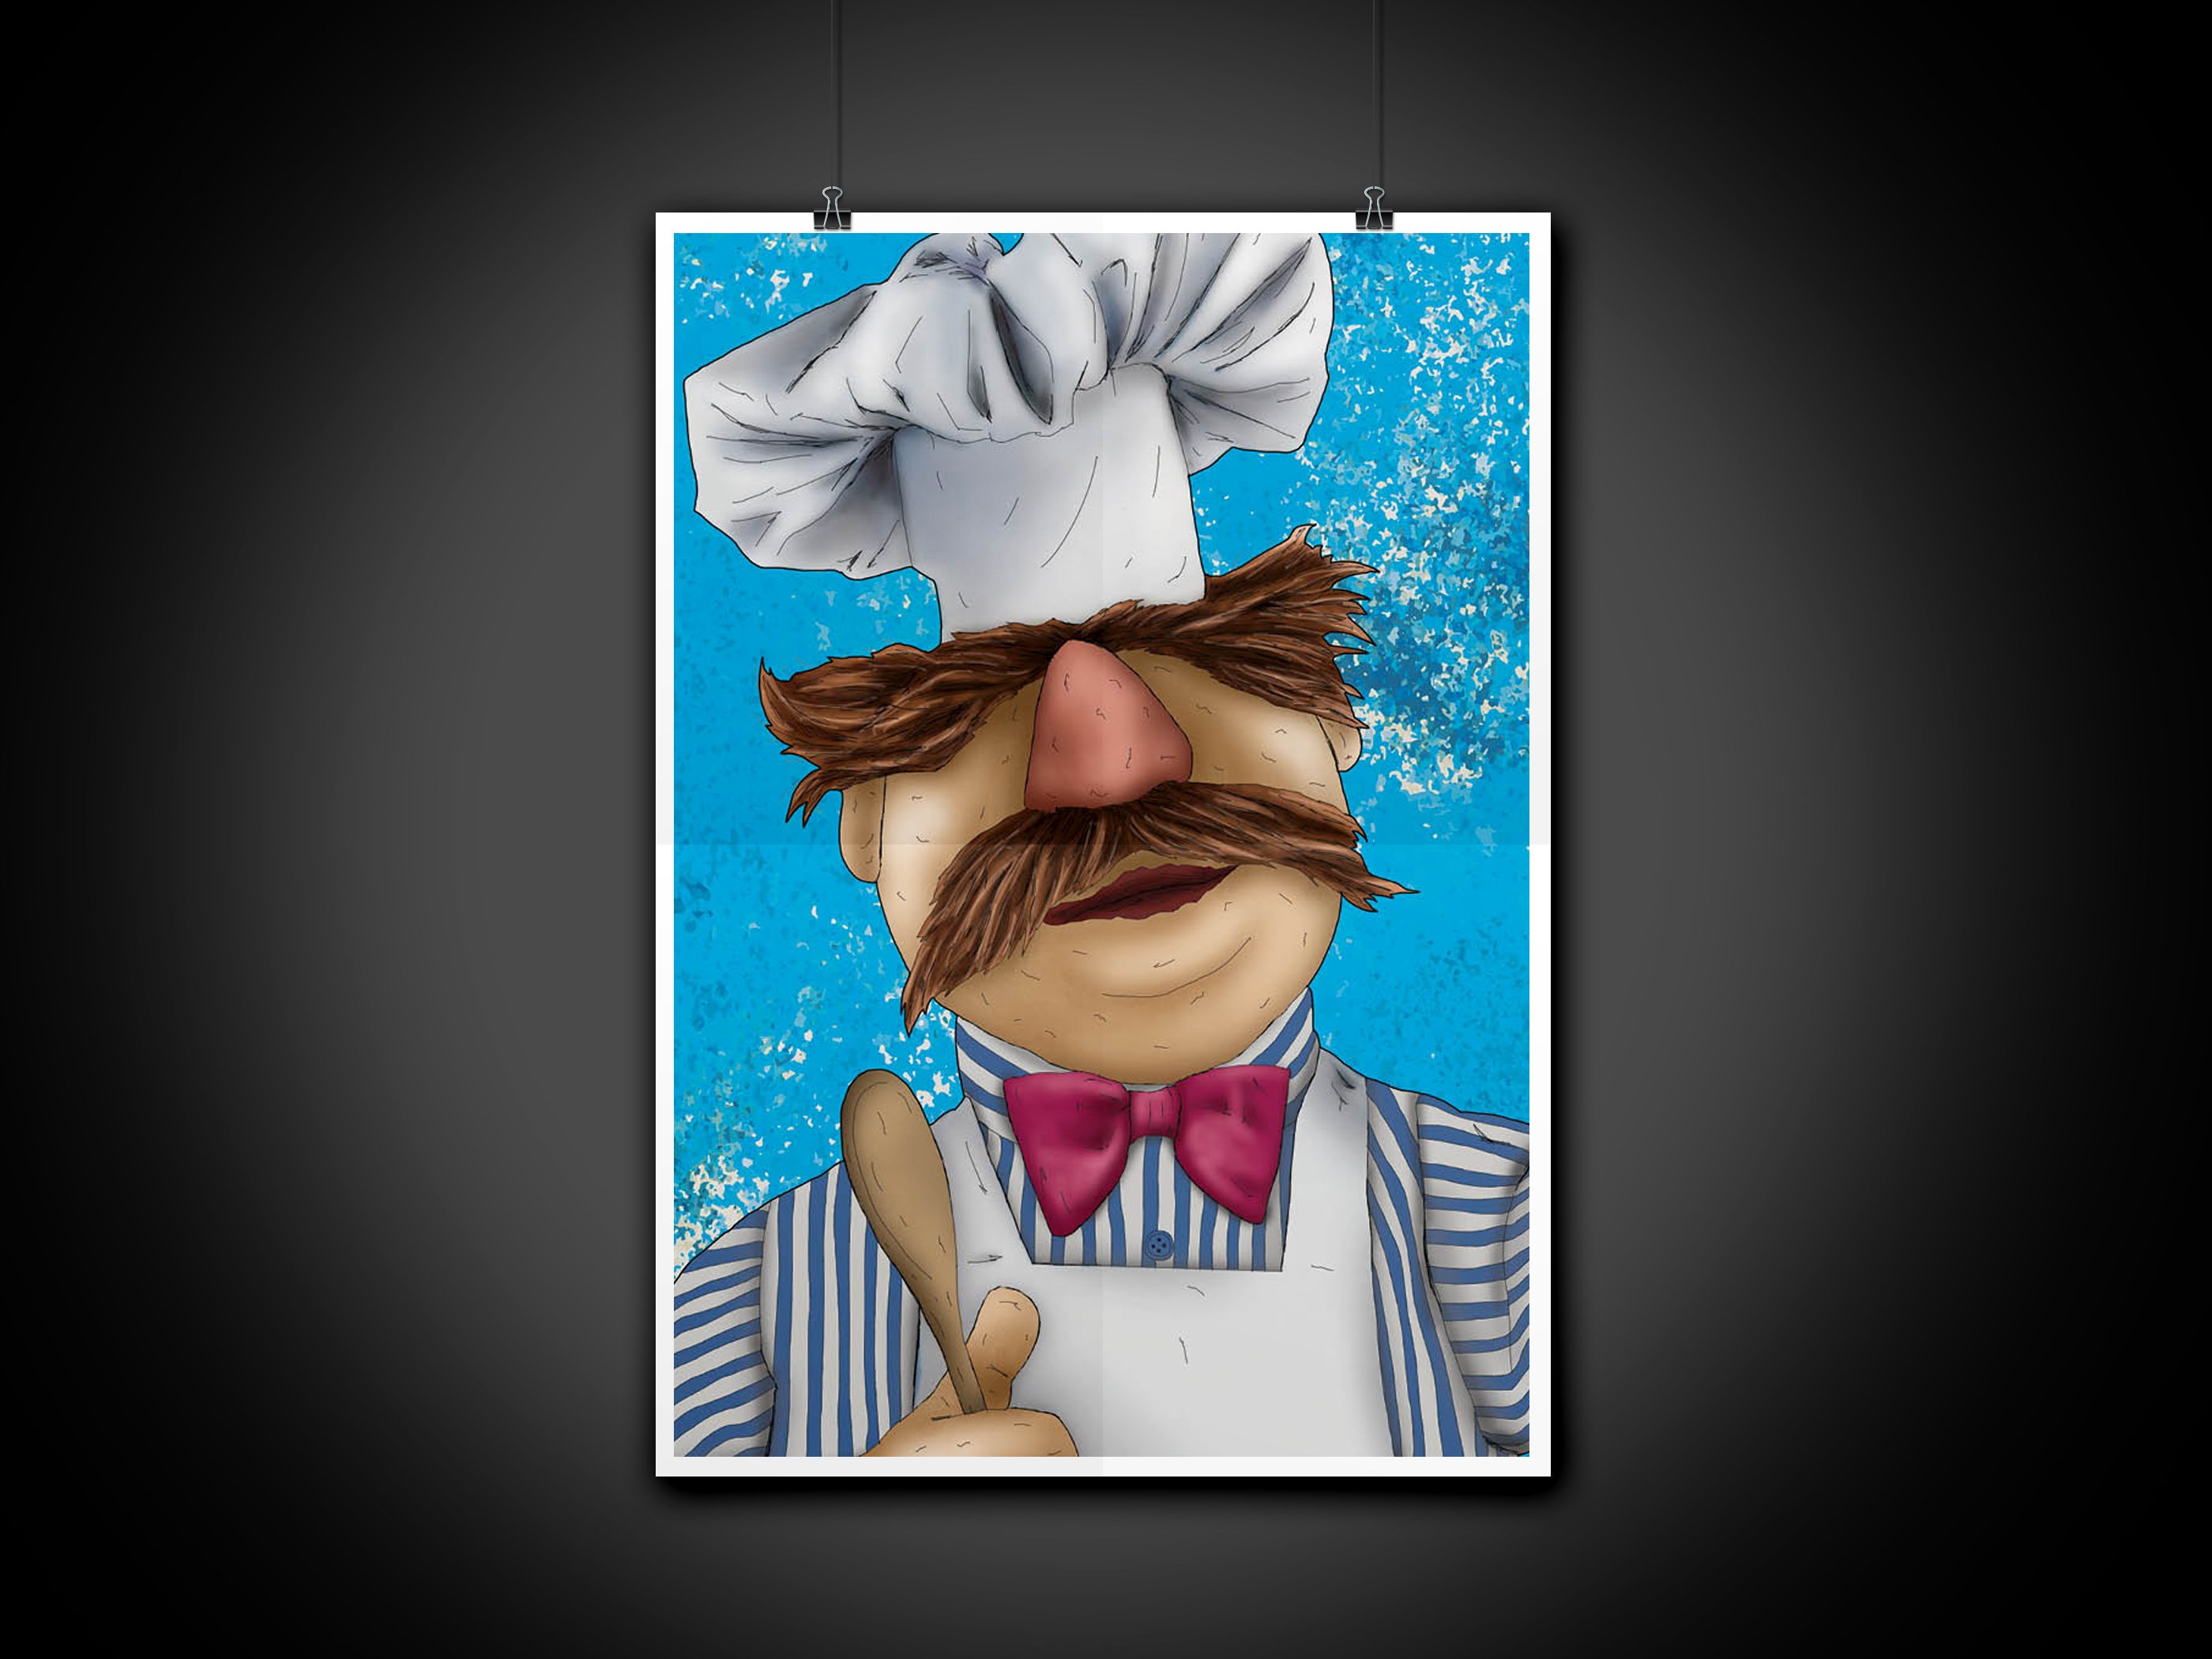 muppets swedish chef